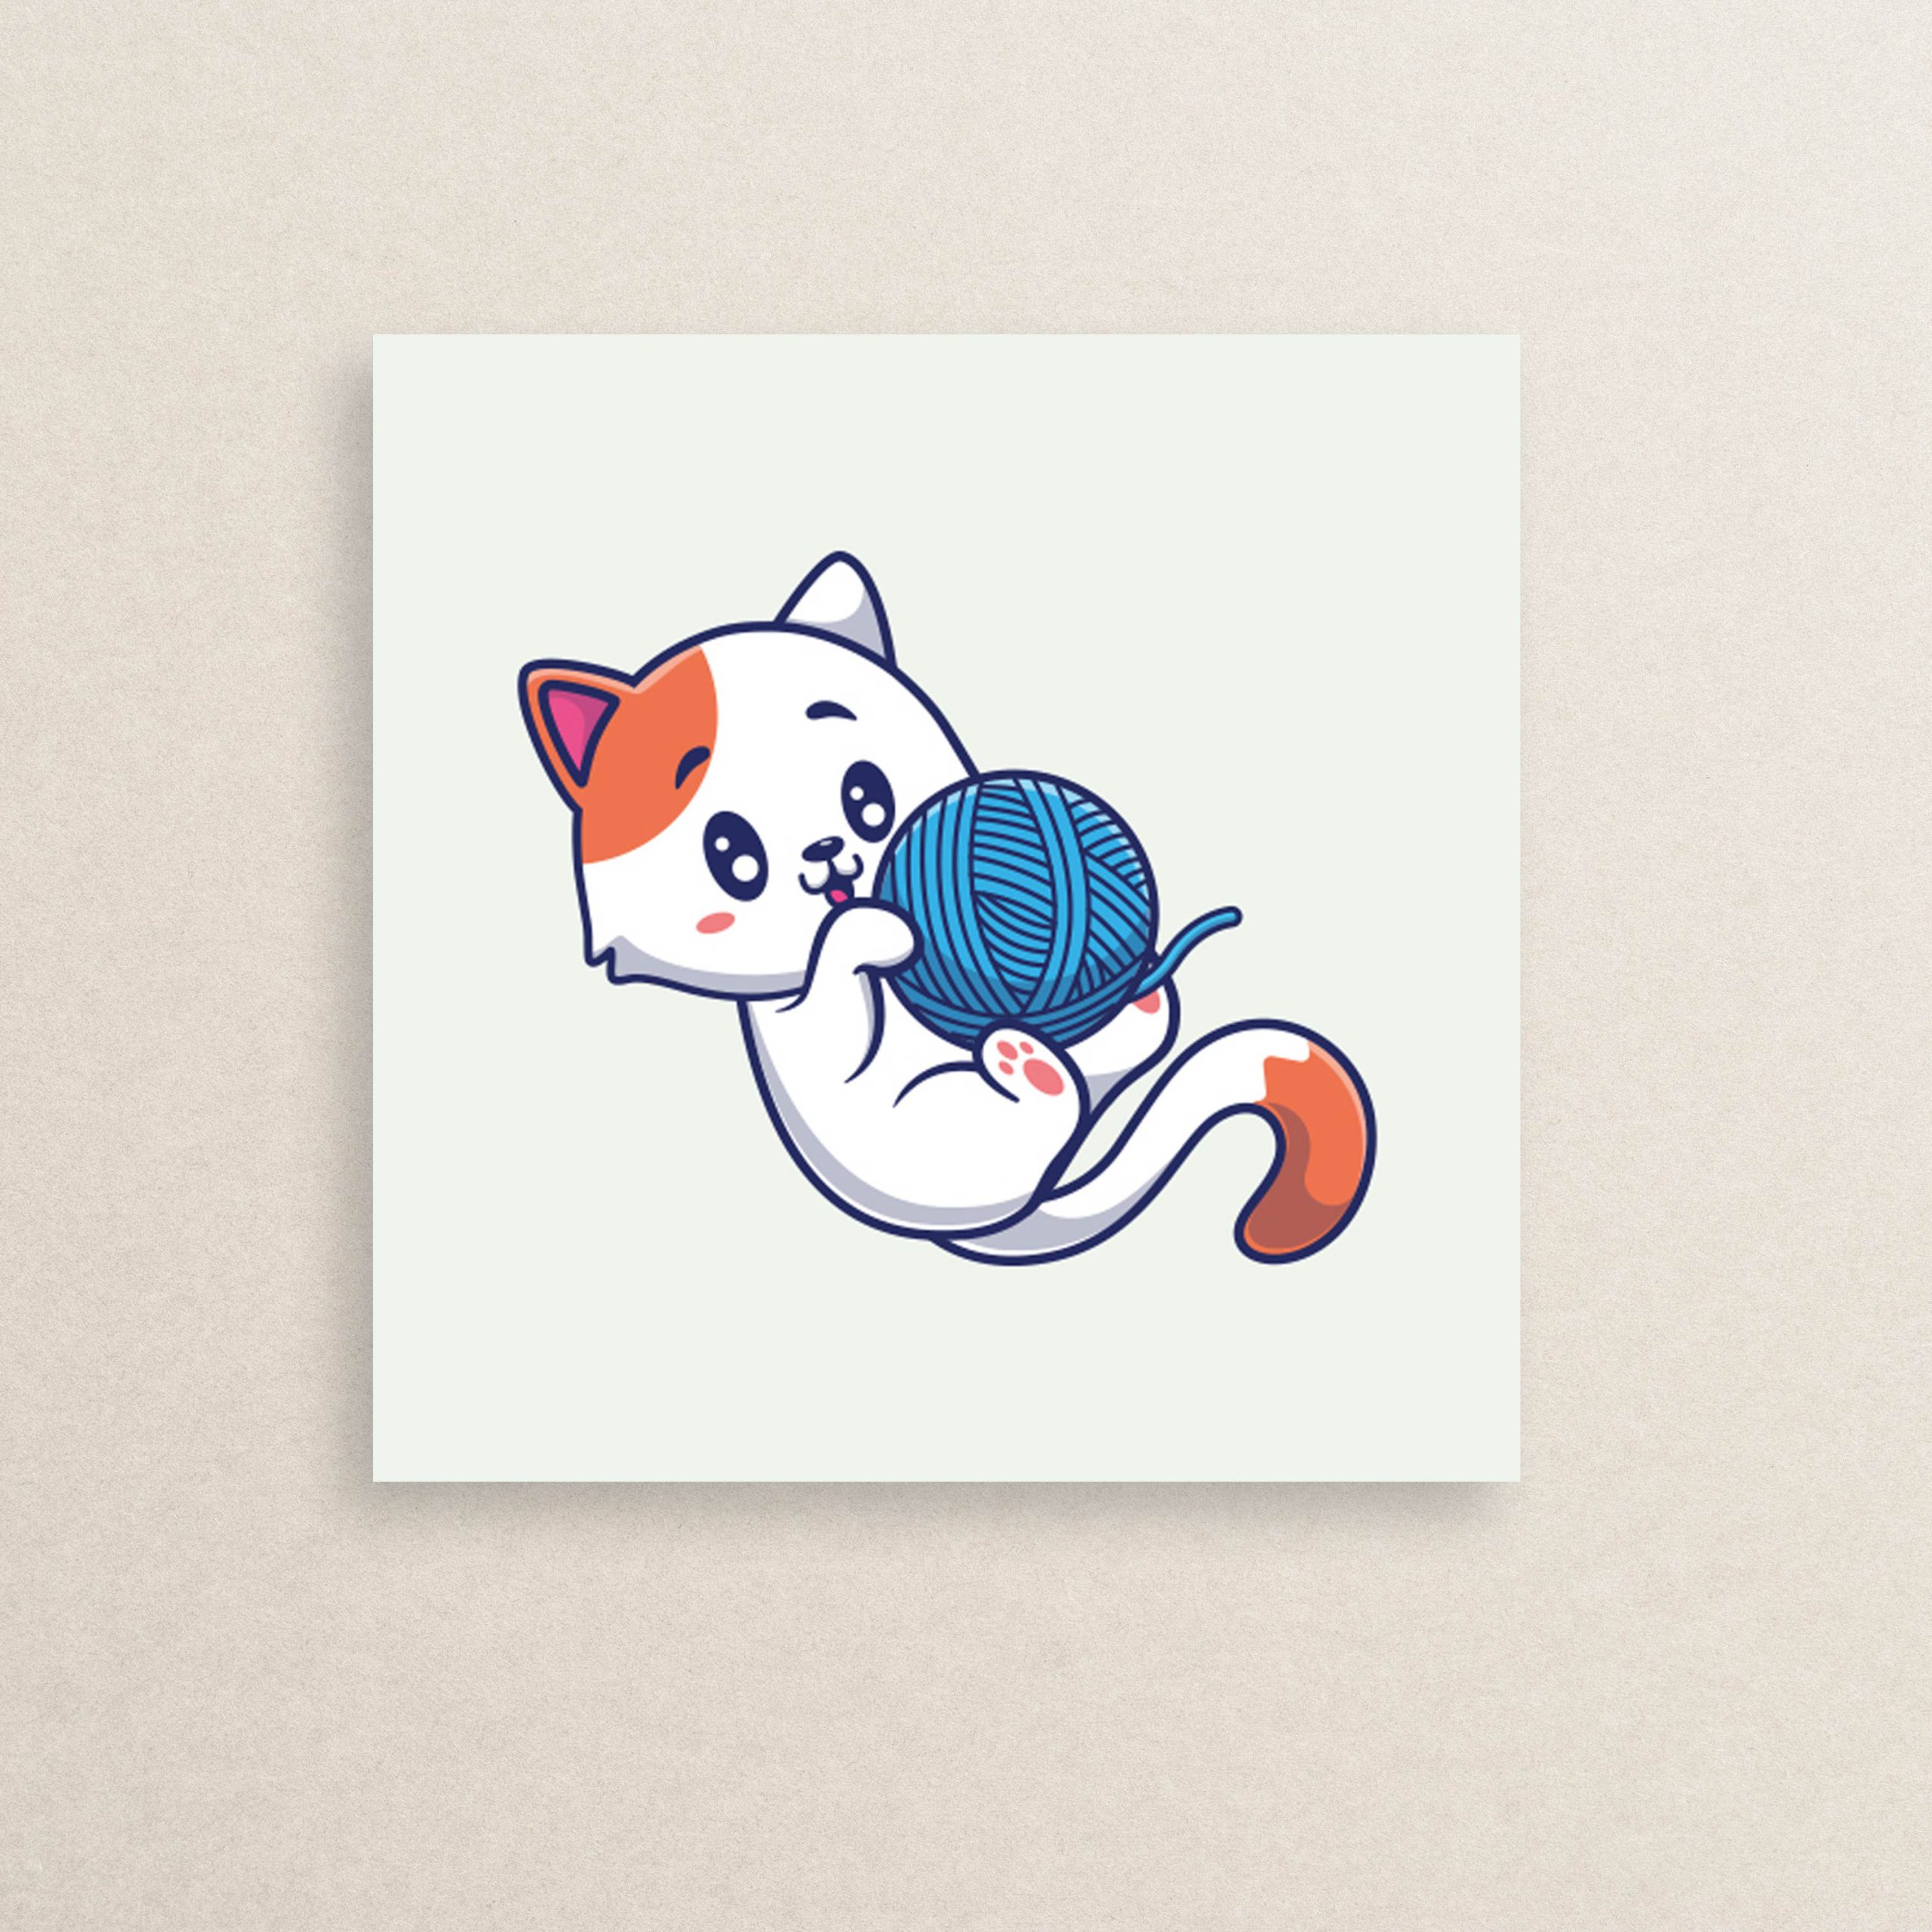 استیکر گربه بازیگوش 01 | Playful cat sticker 01